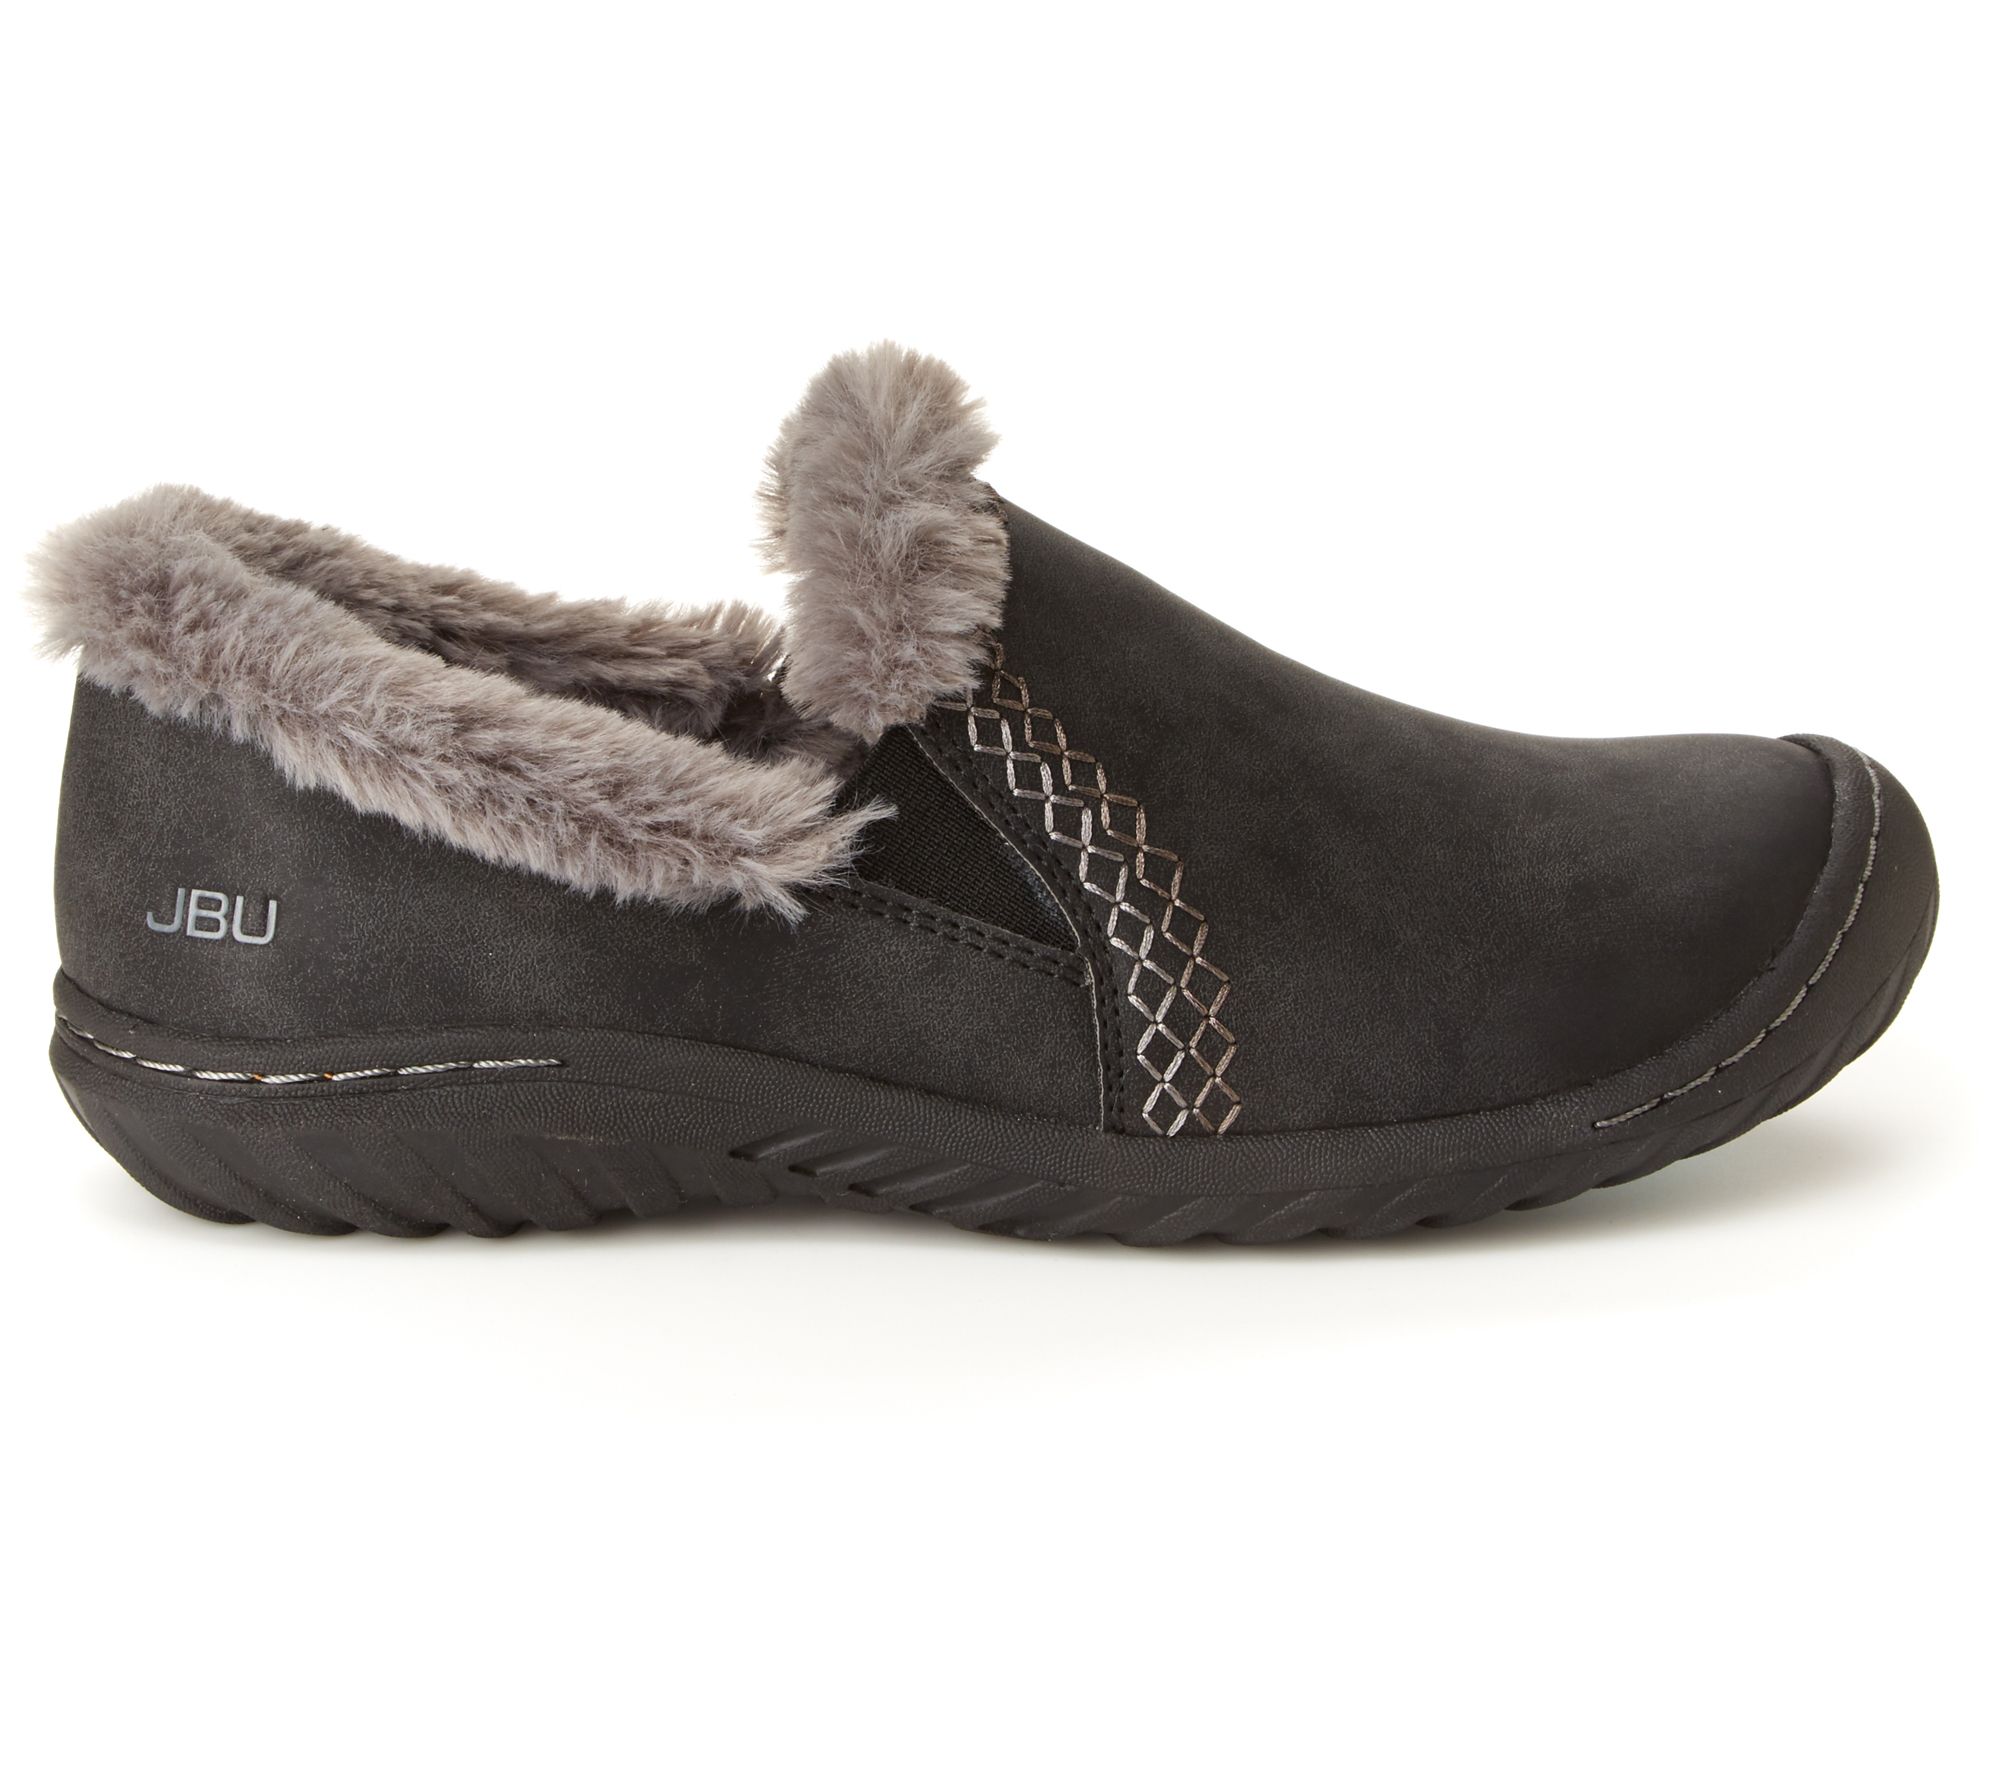 JBU by Jambu Comfort Leather Slip-Ons - Willow - QVC.com